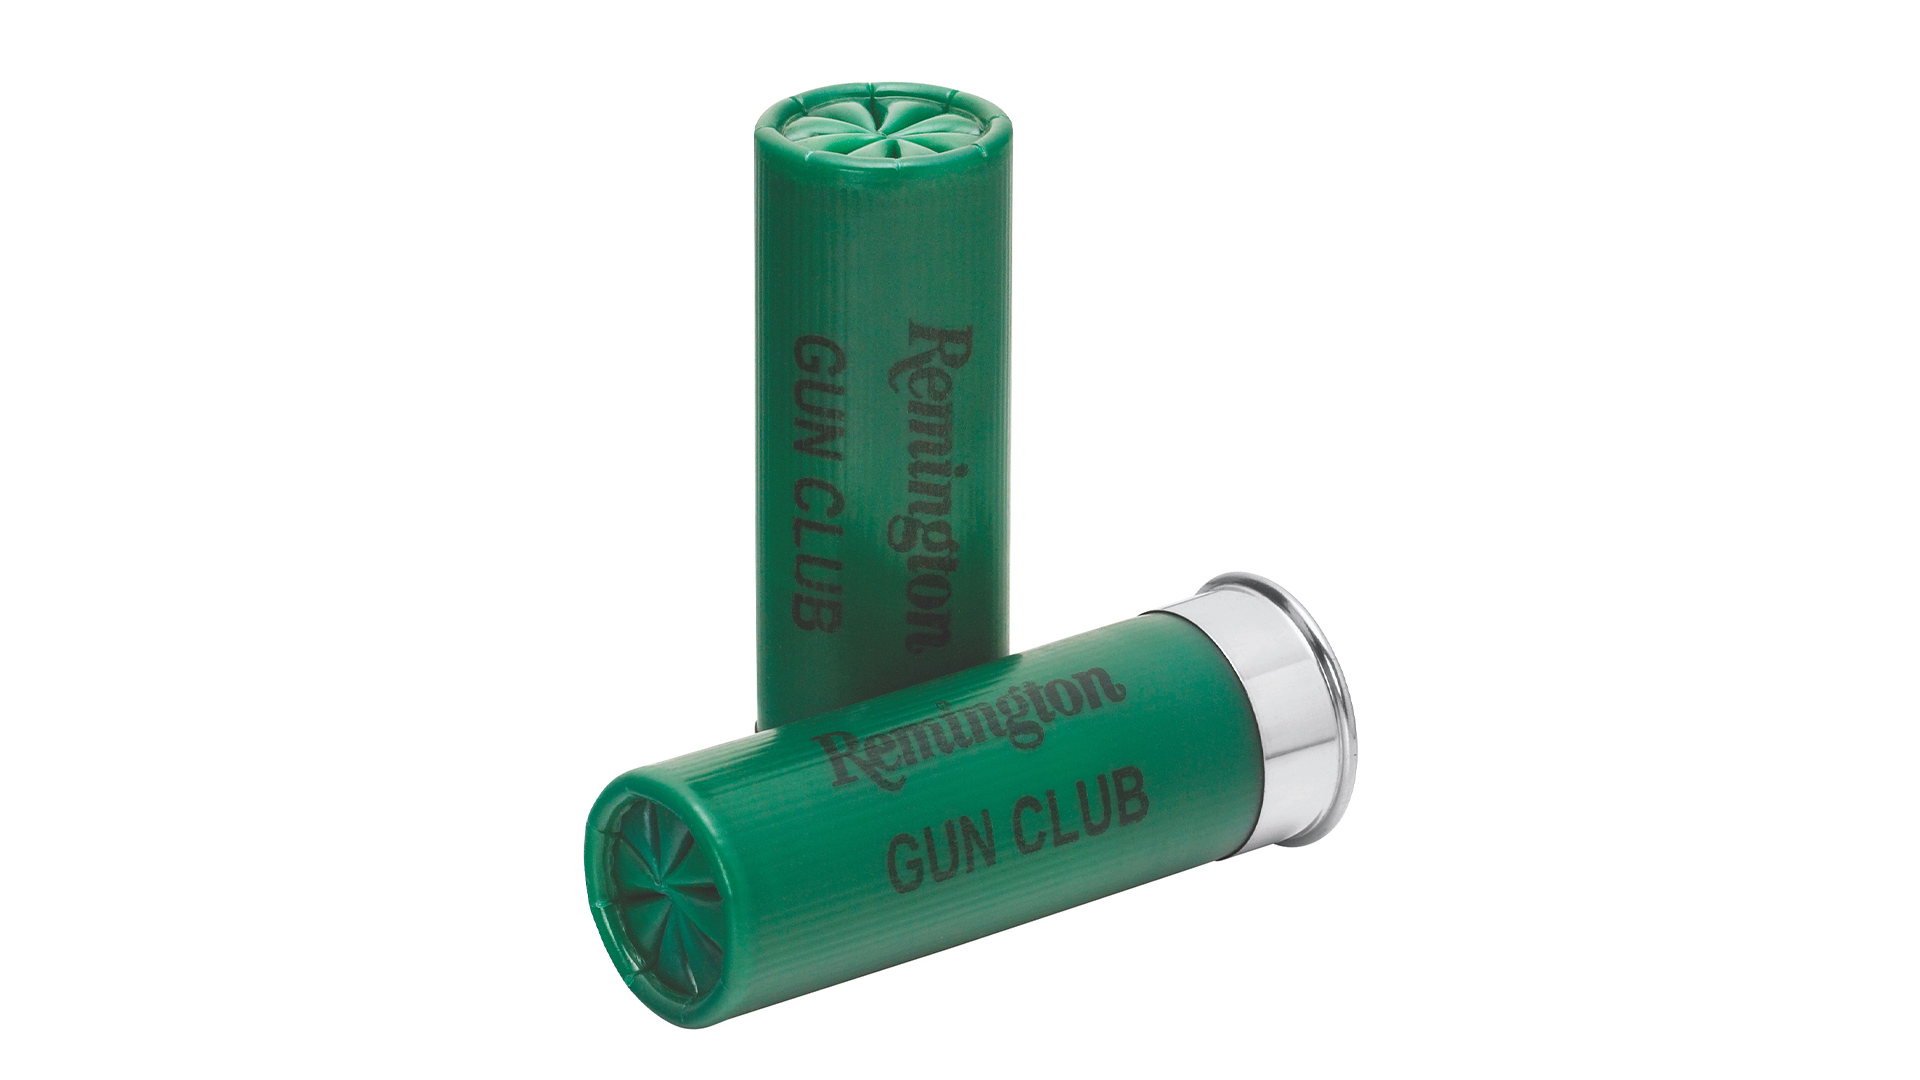 Remington Gun Club Sporting Clays shotshells